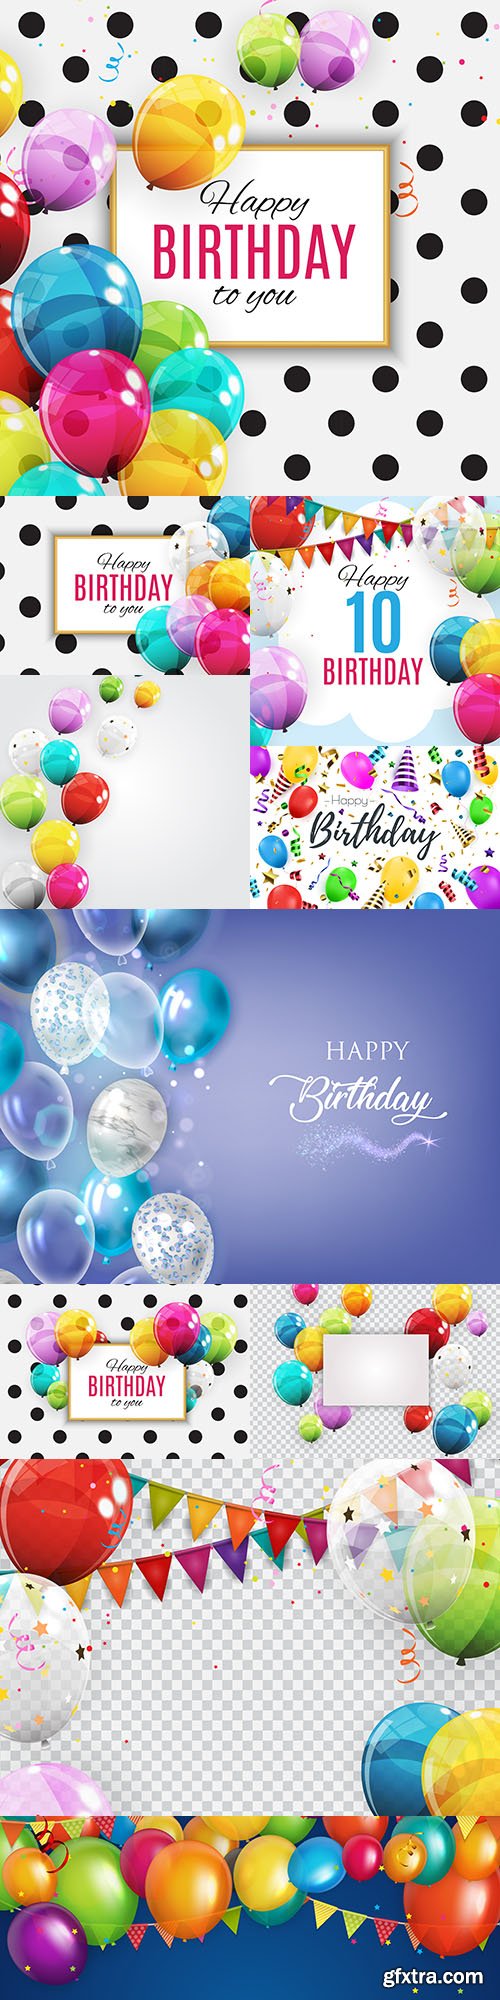 Happy birthday holiday invitation balloons and gifts 20